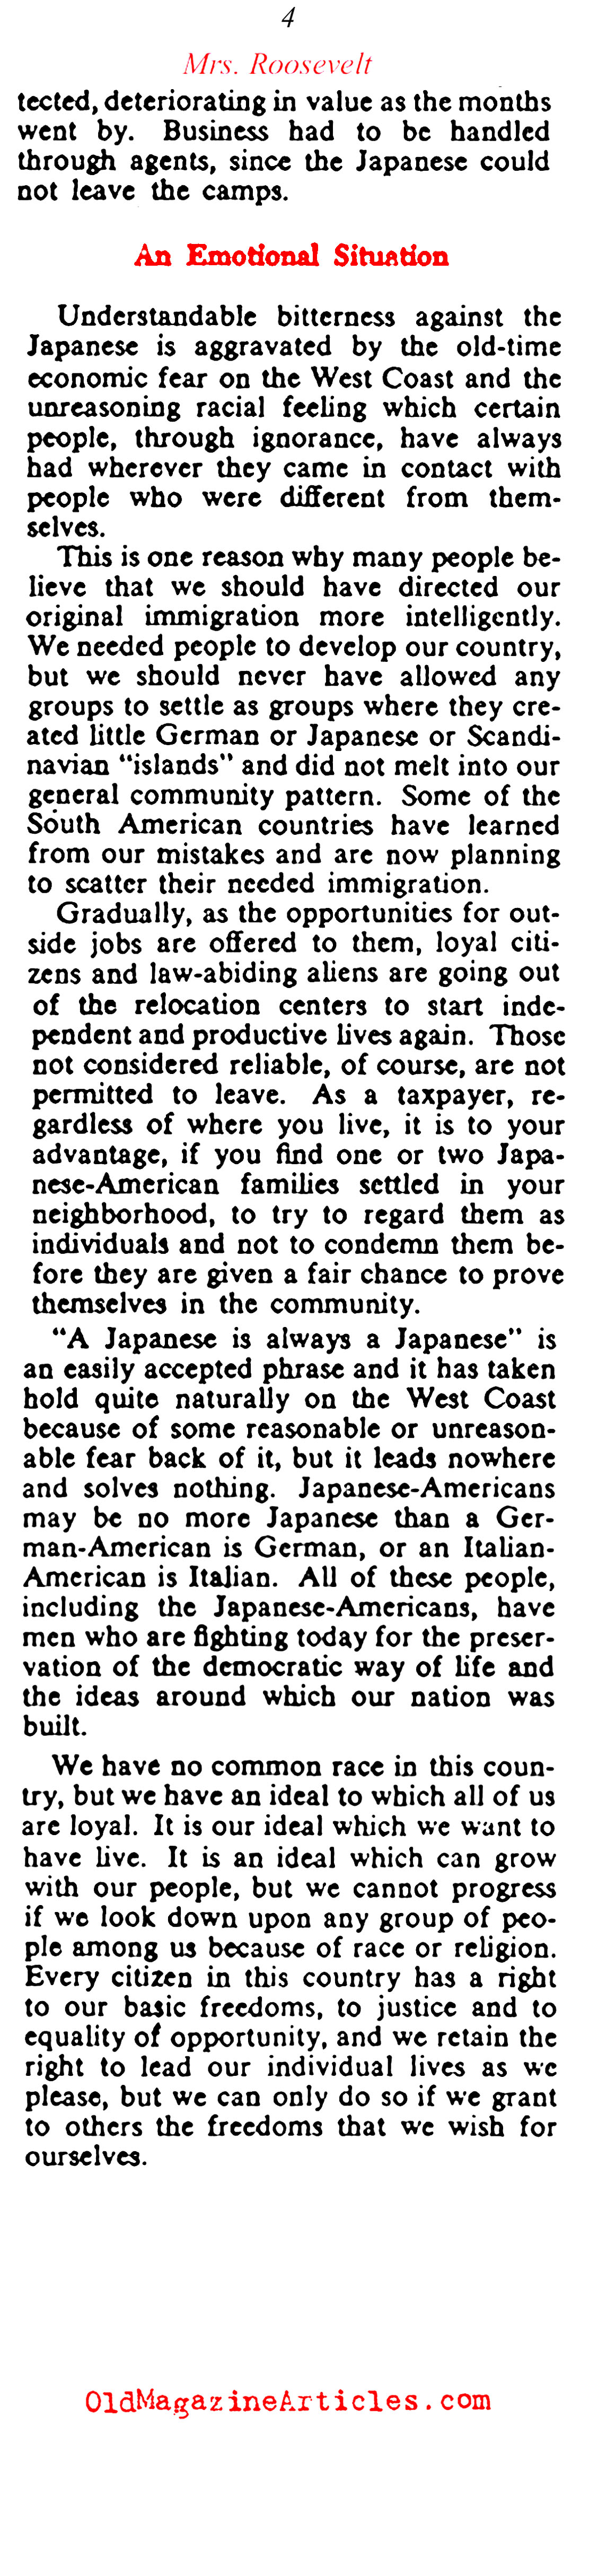 Eleanor Roosevelt on Japanese-American Internment (Collier's, 1943)